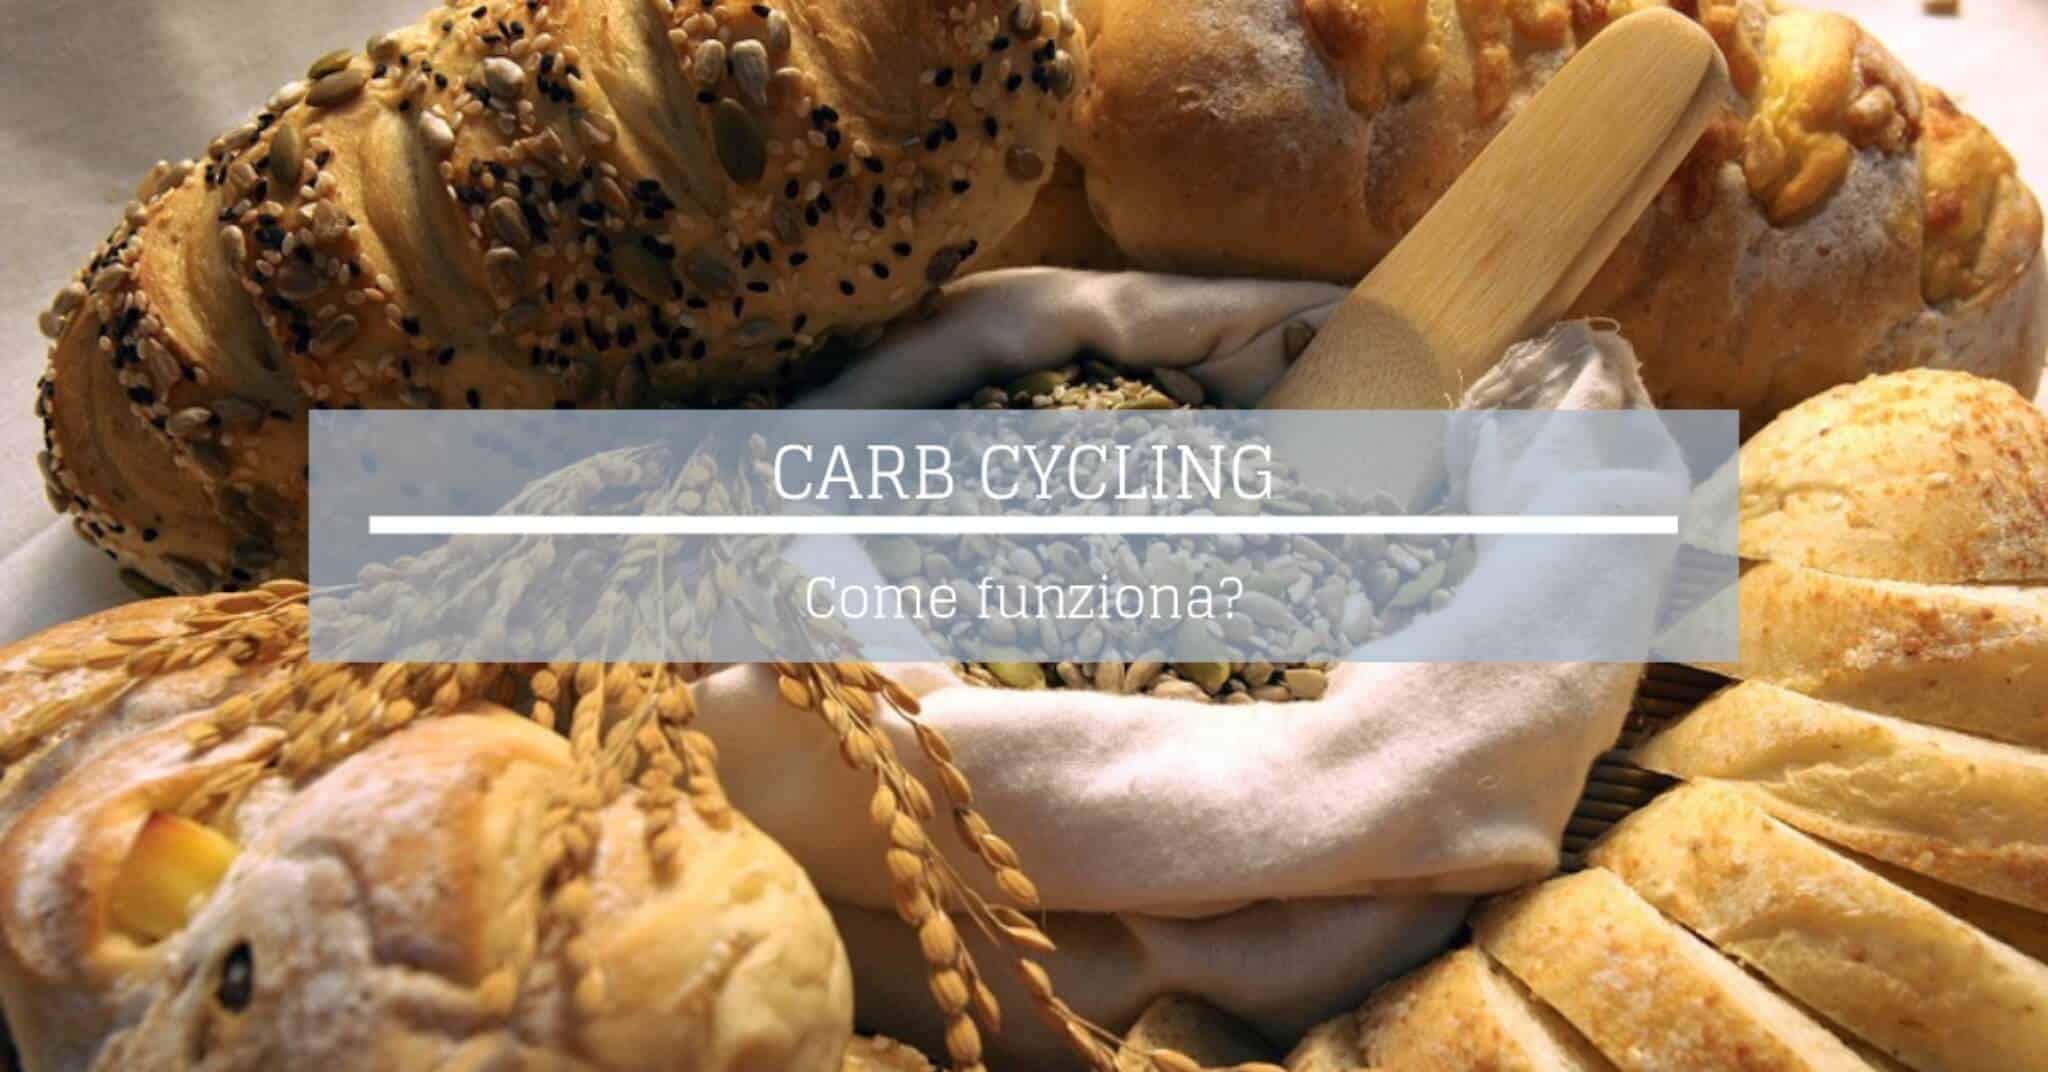 Carb cycling